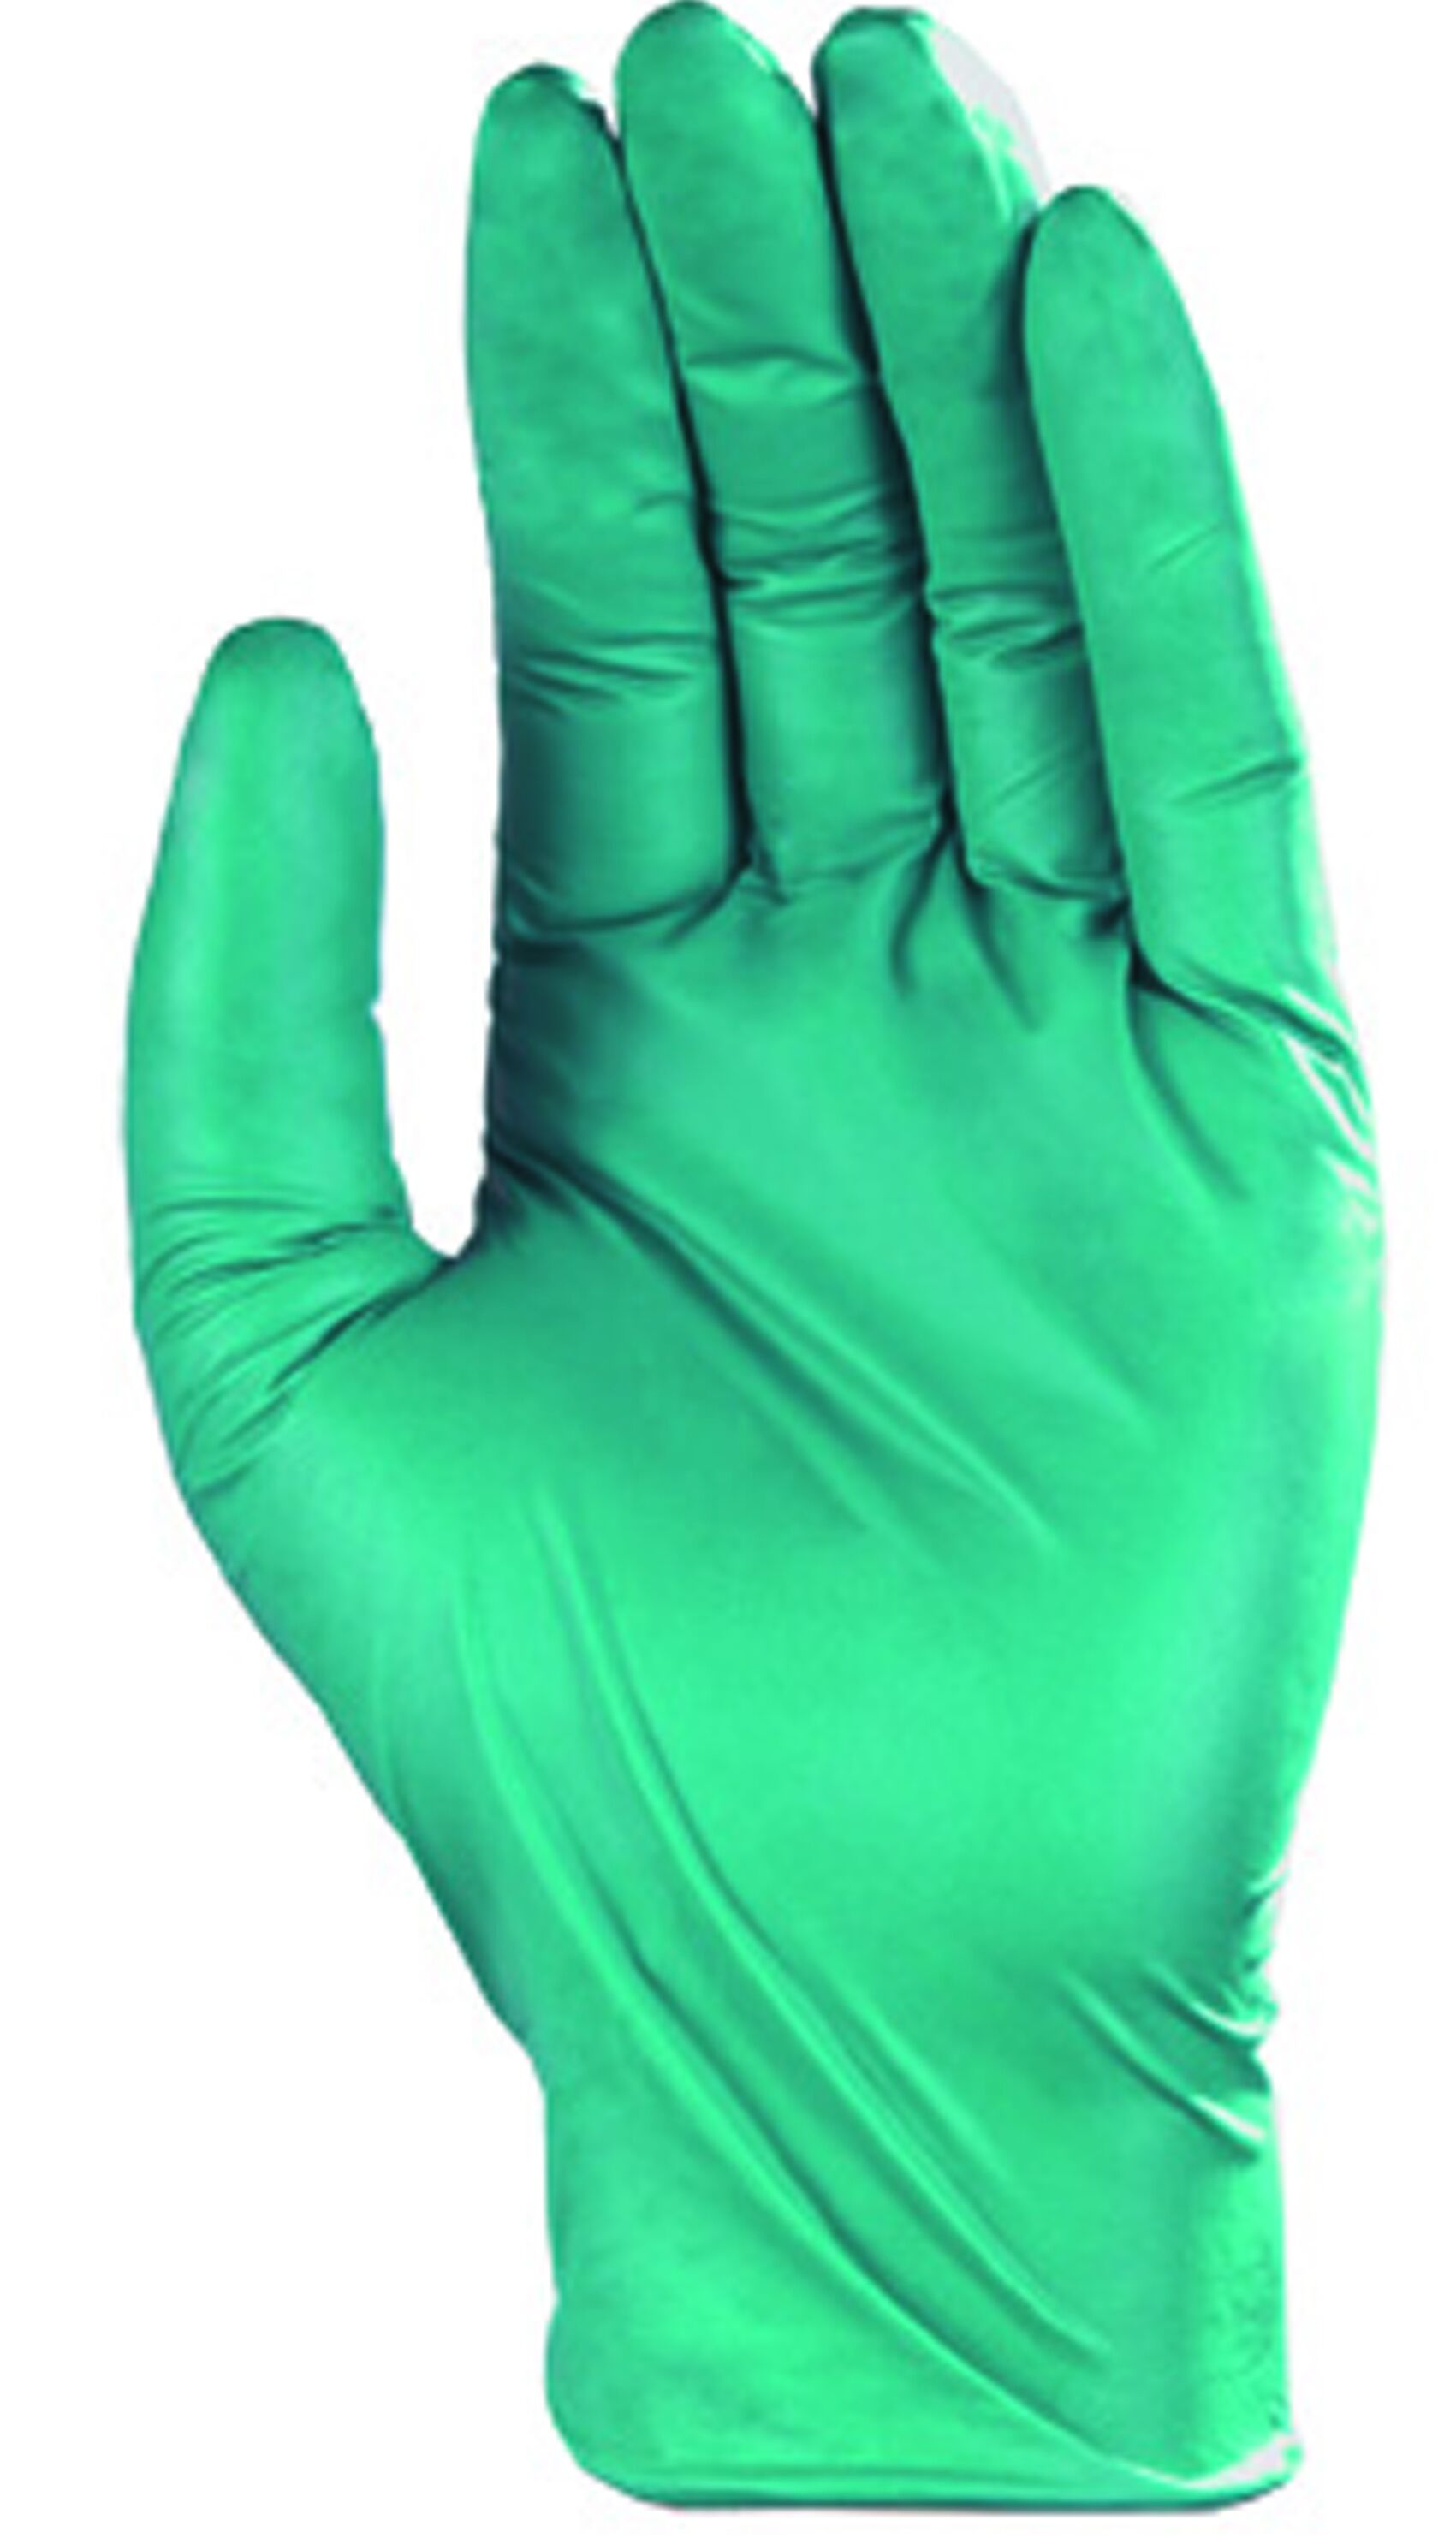 Gants en nitrile - Boite 60 gants nitriles résistants